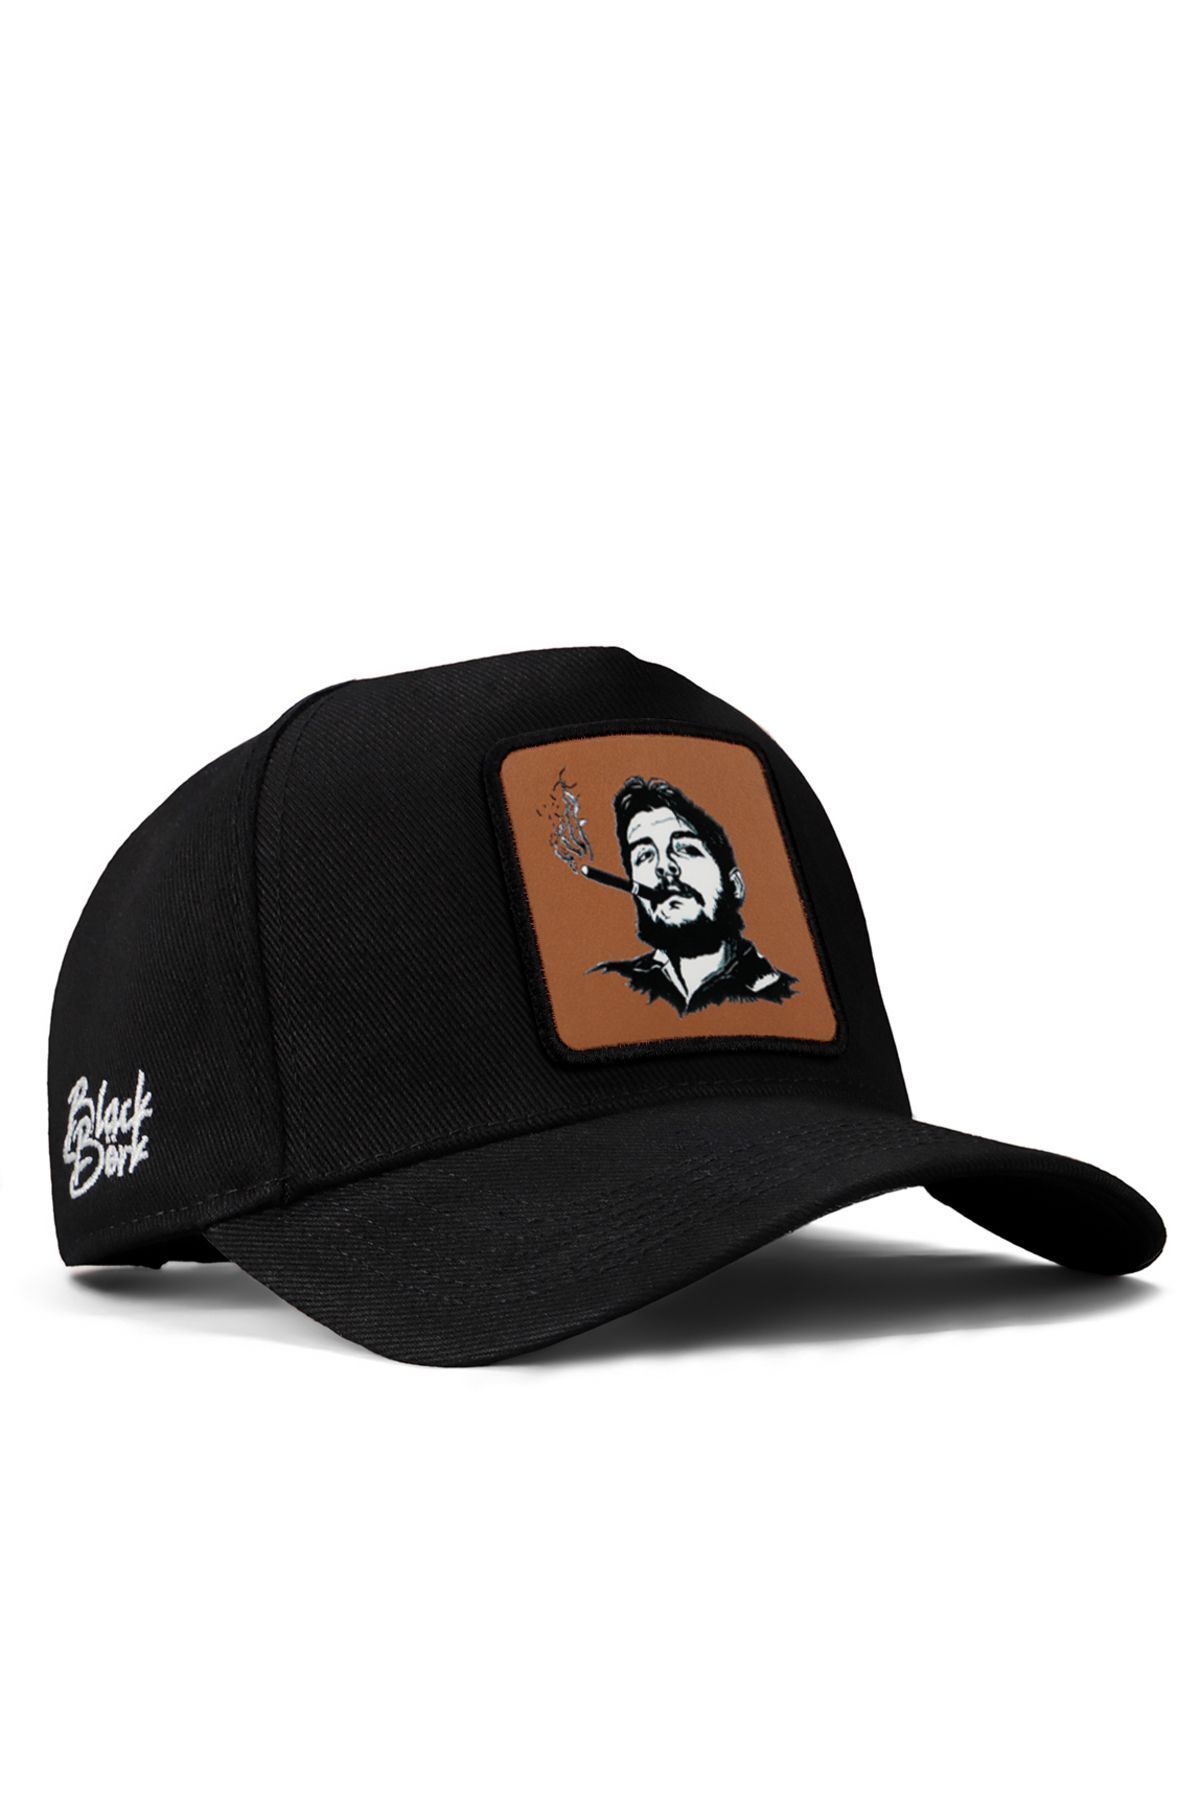 BlackBörk V1 Baseball Che Guevara - 2cs Kod Logolu Unisex Siyah Şapka (CAP)